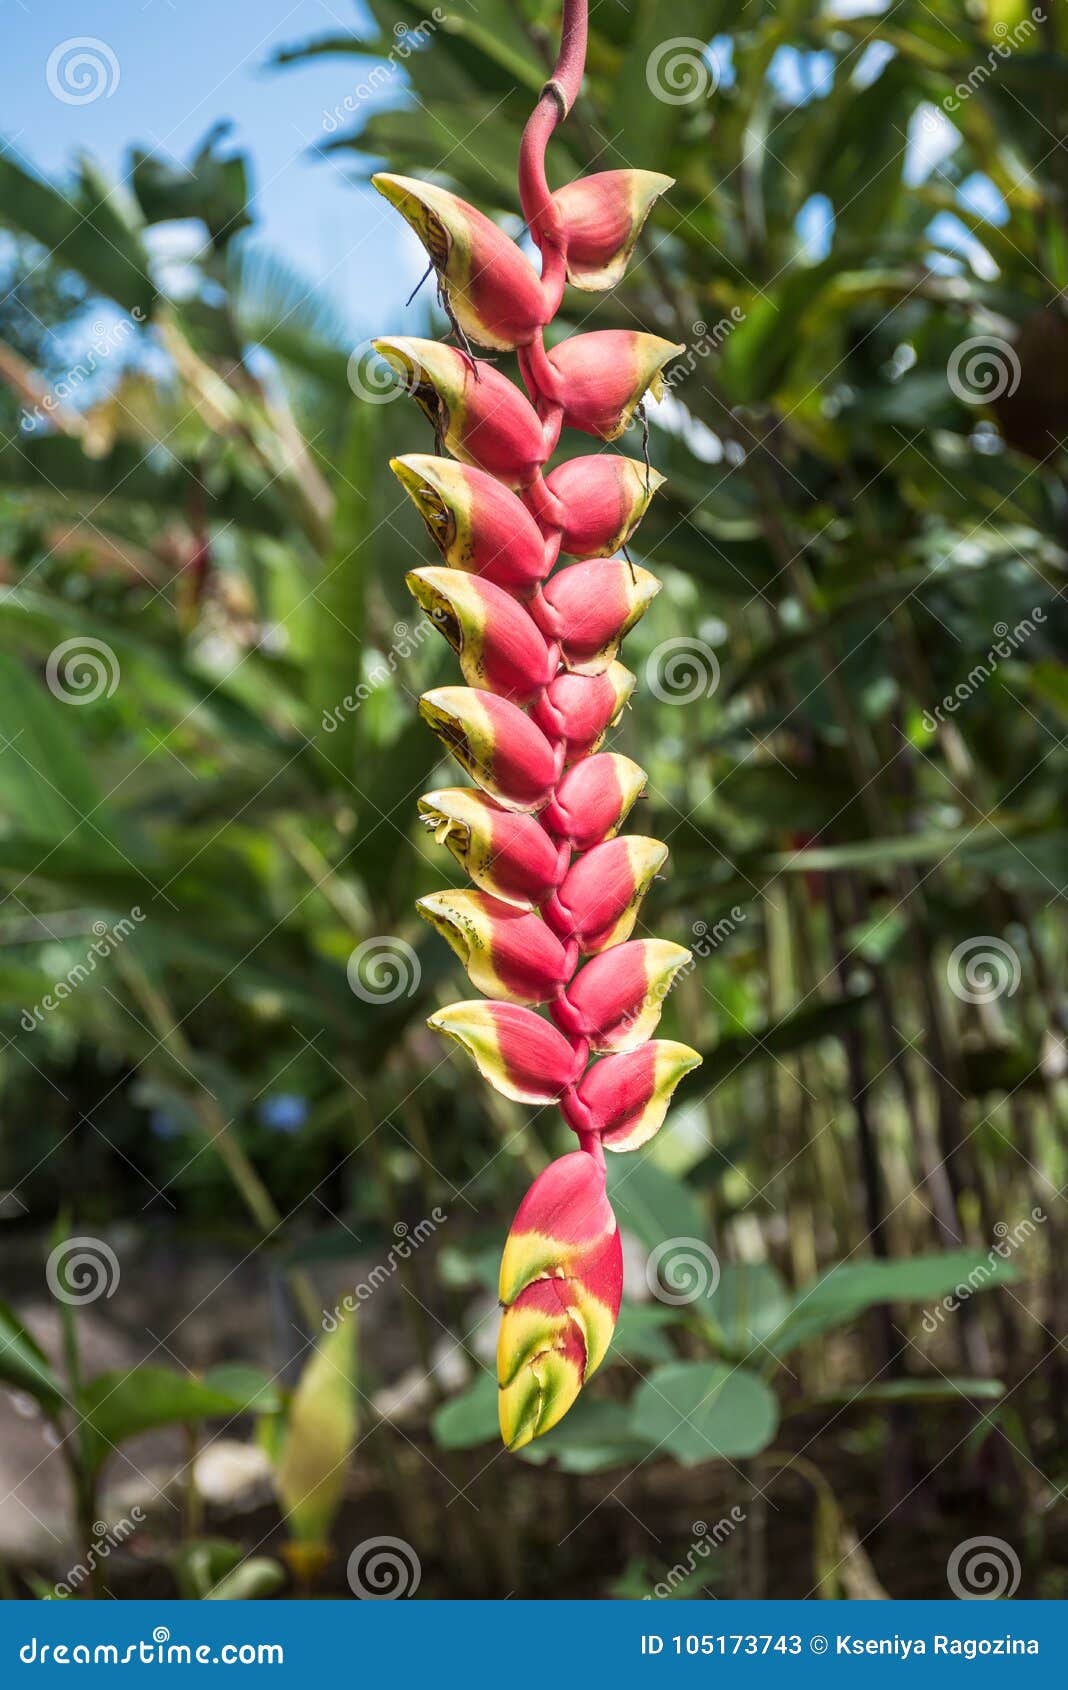 heliconia flower, amazonia, ecuador